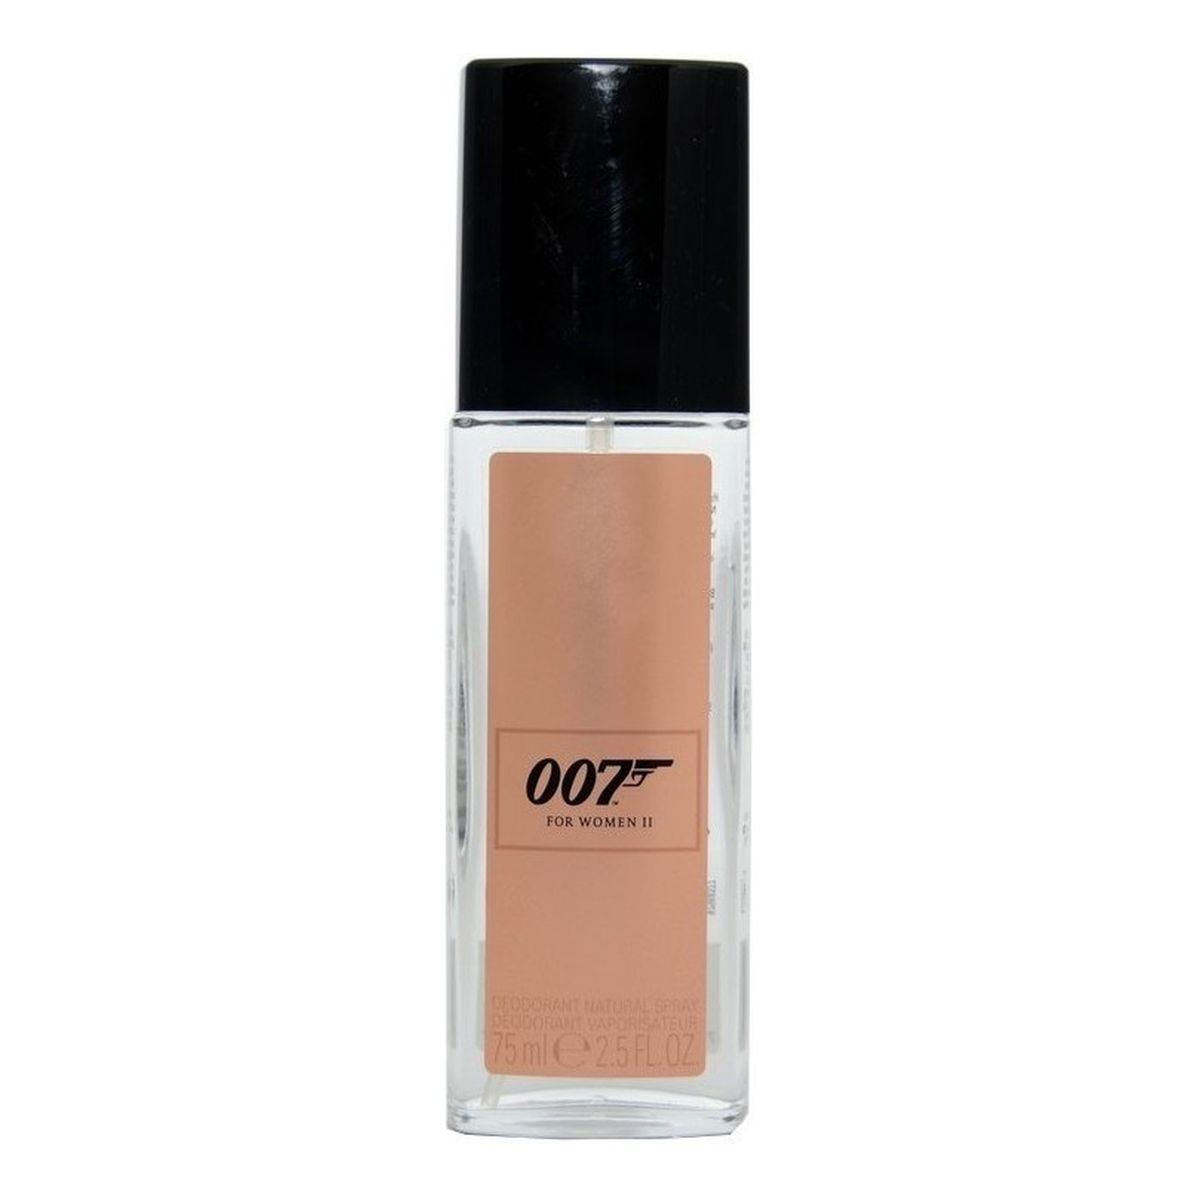 James Bond 007 for Women II dezodorant atomizer 75ml